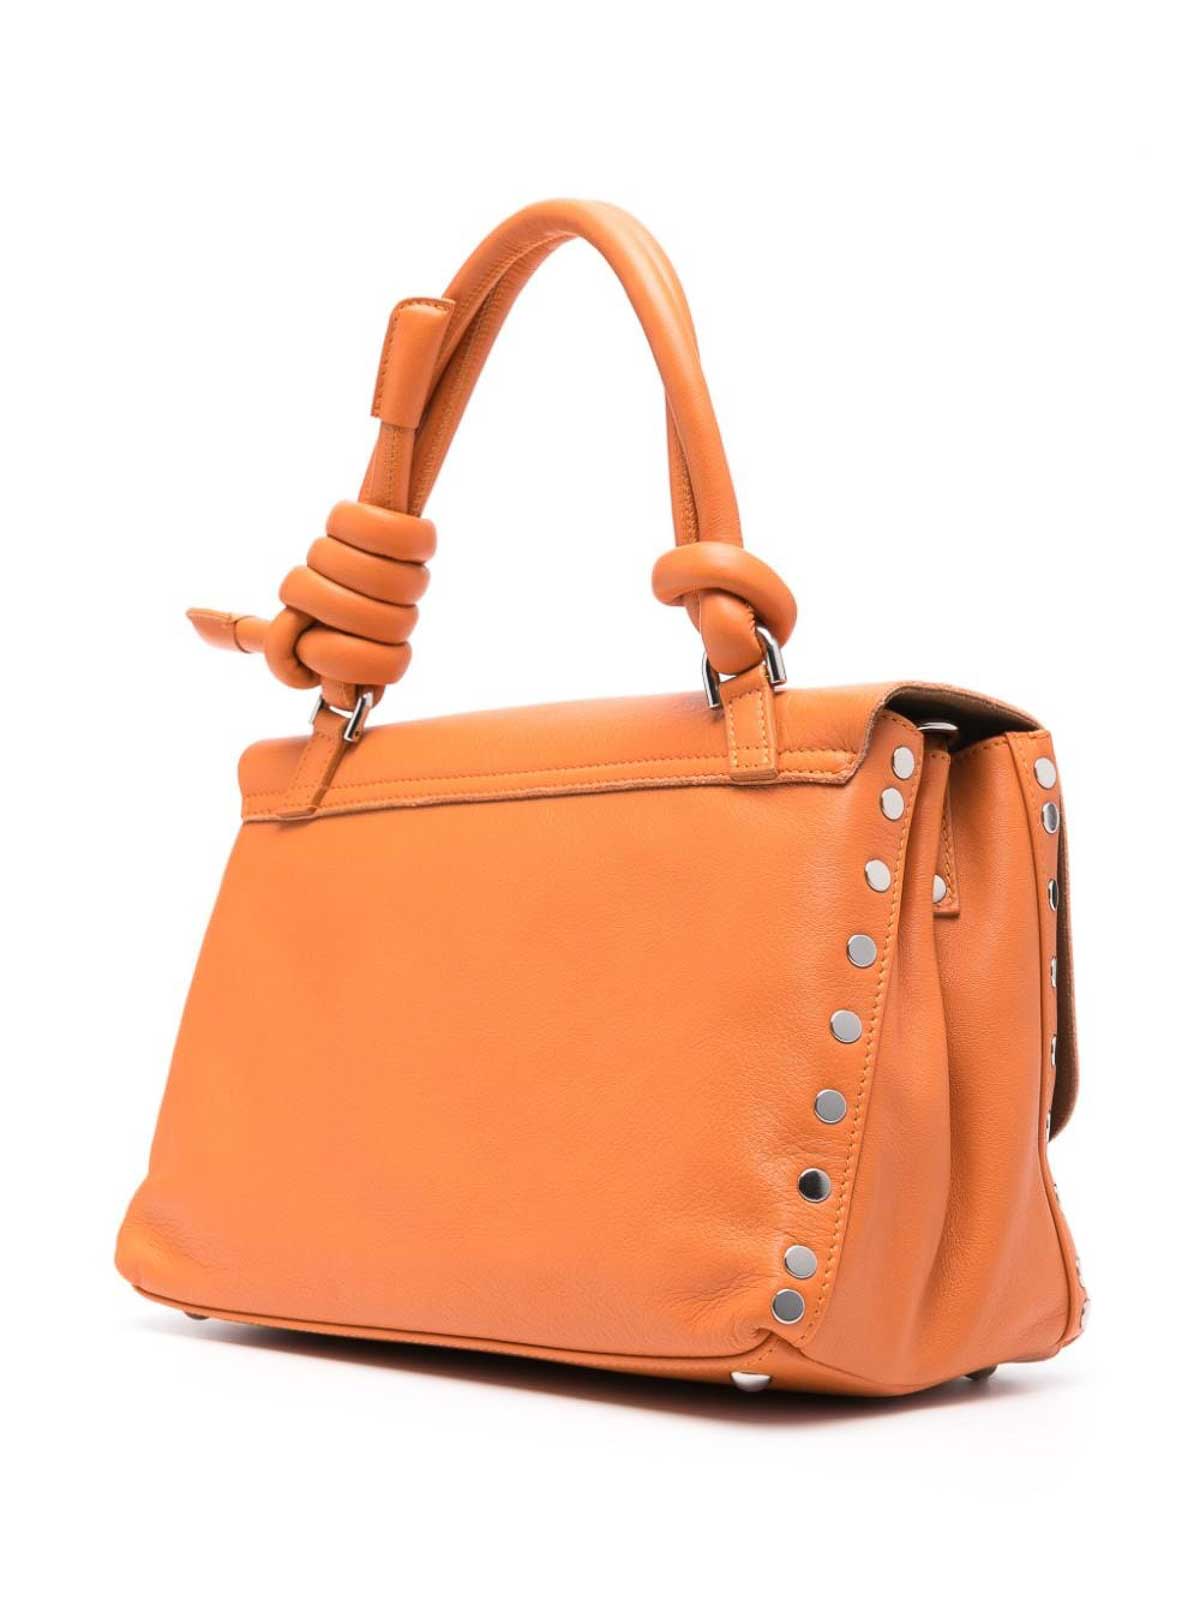 Shop Zanellato Postina S Leather Handbag In Naranja